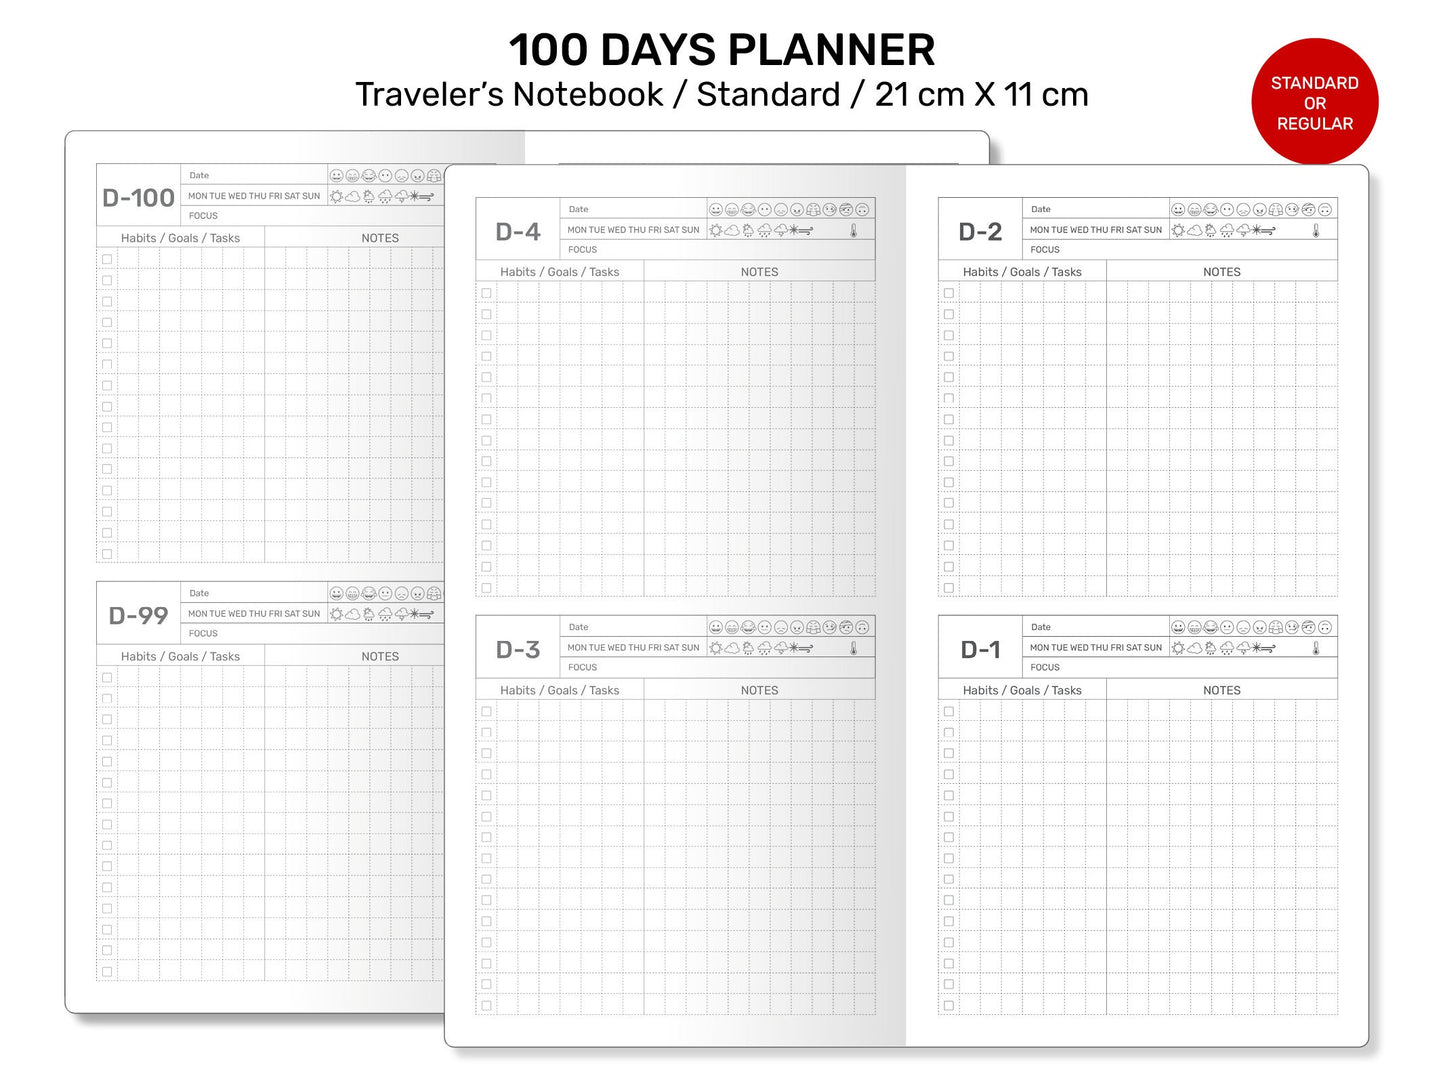 100 DAYS PLANNER Printable Traveler's Notebook Insert Standard Size